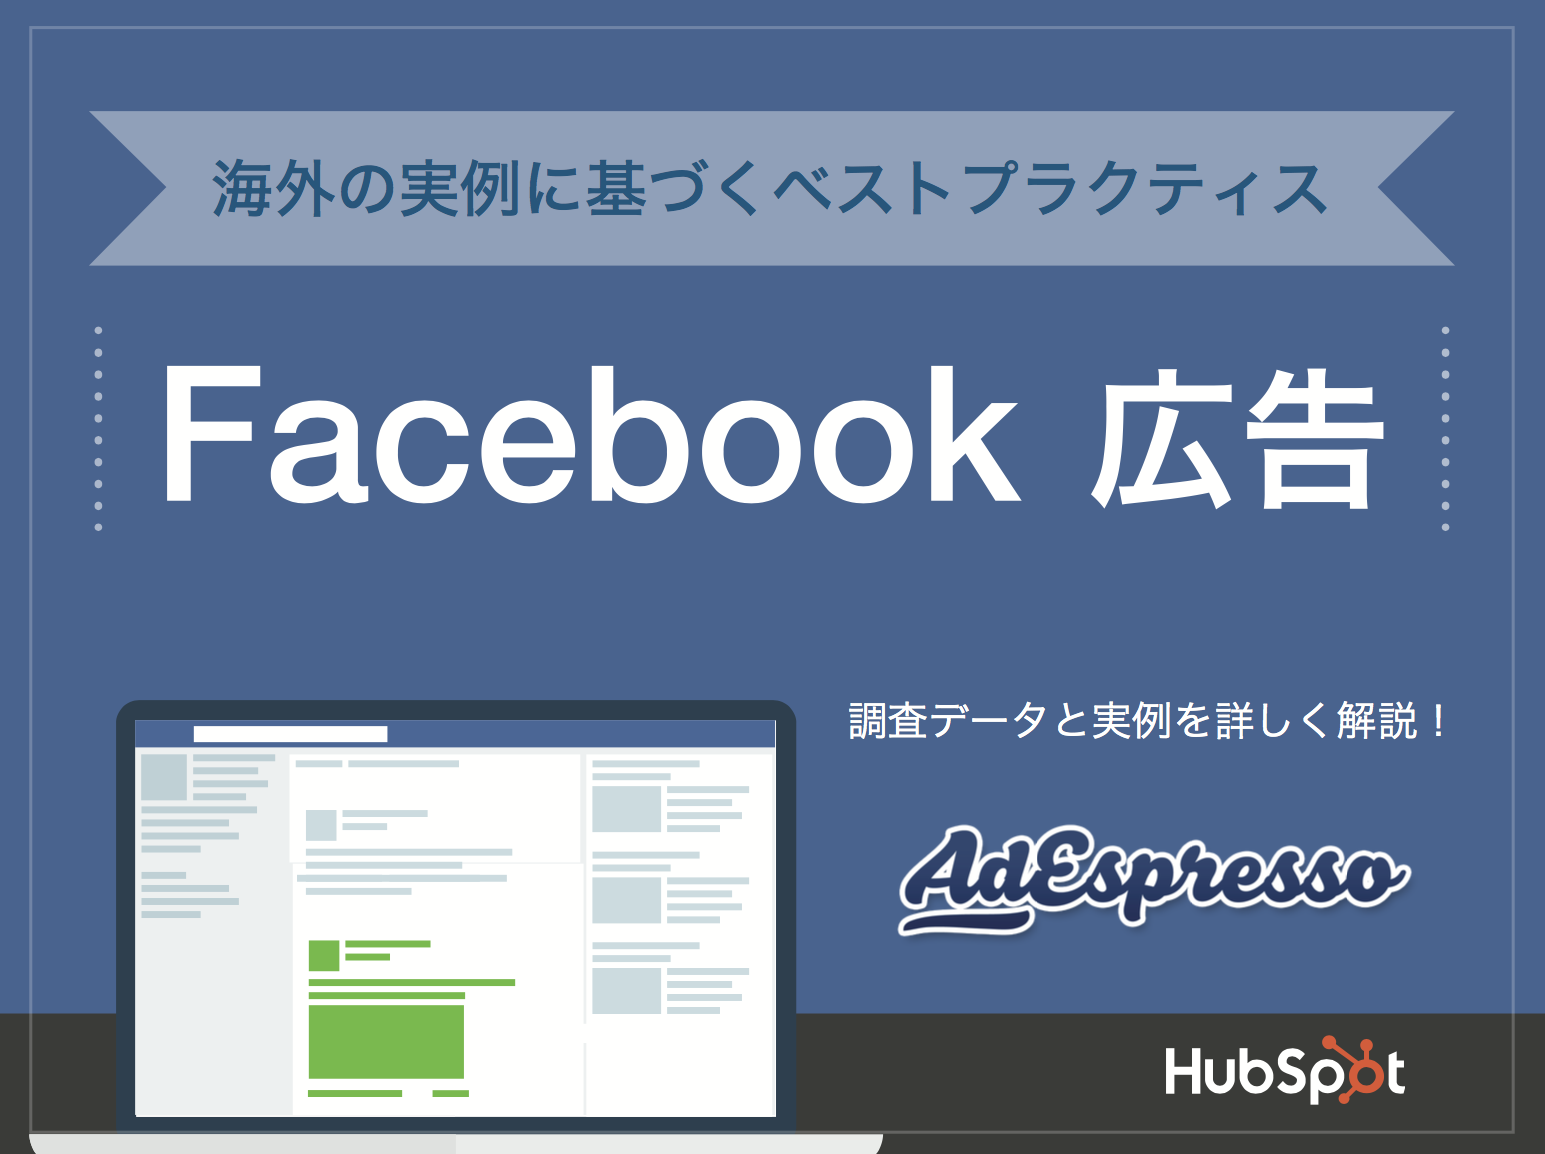 Facebook広告AdEspresspo